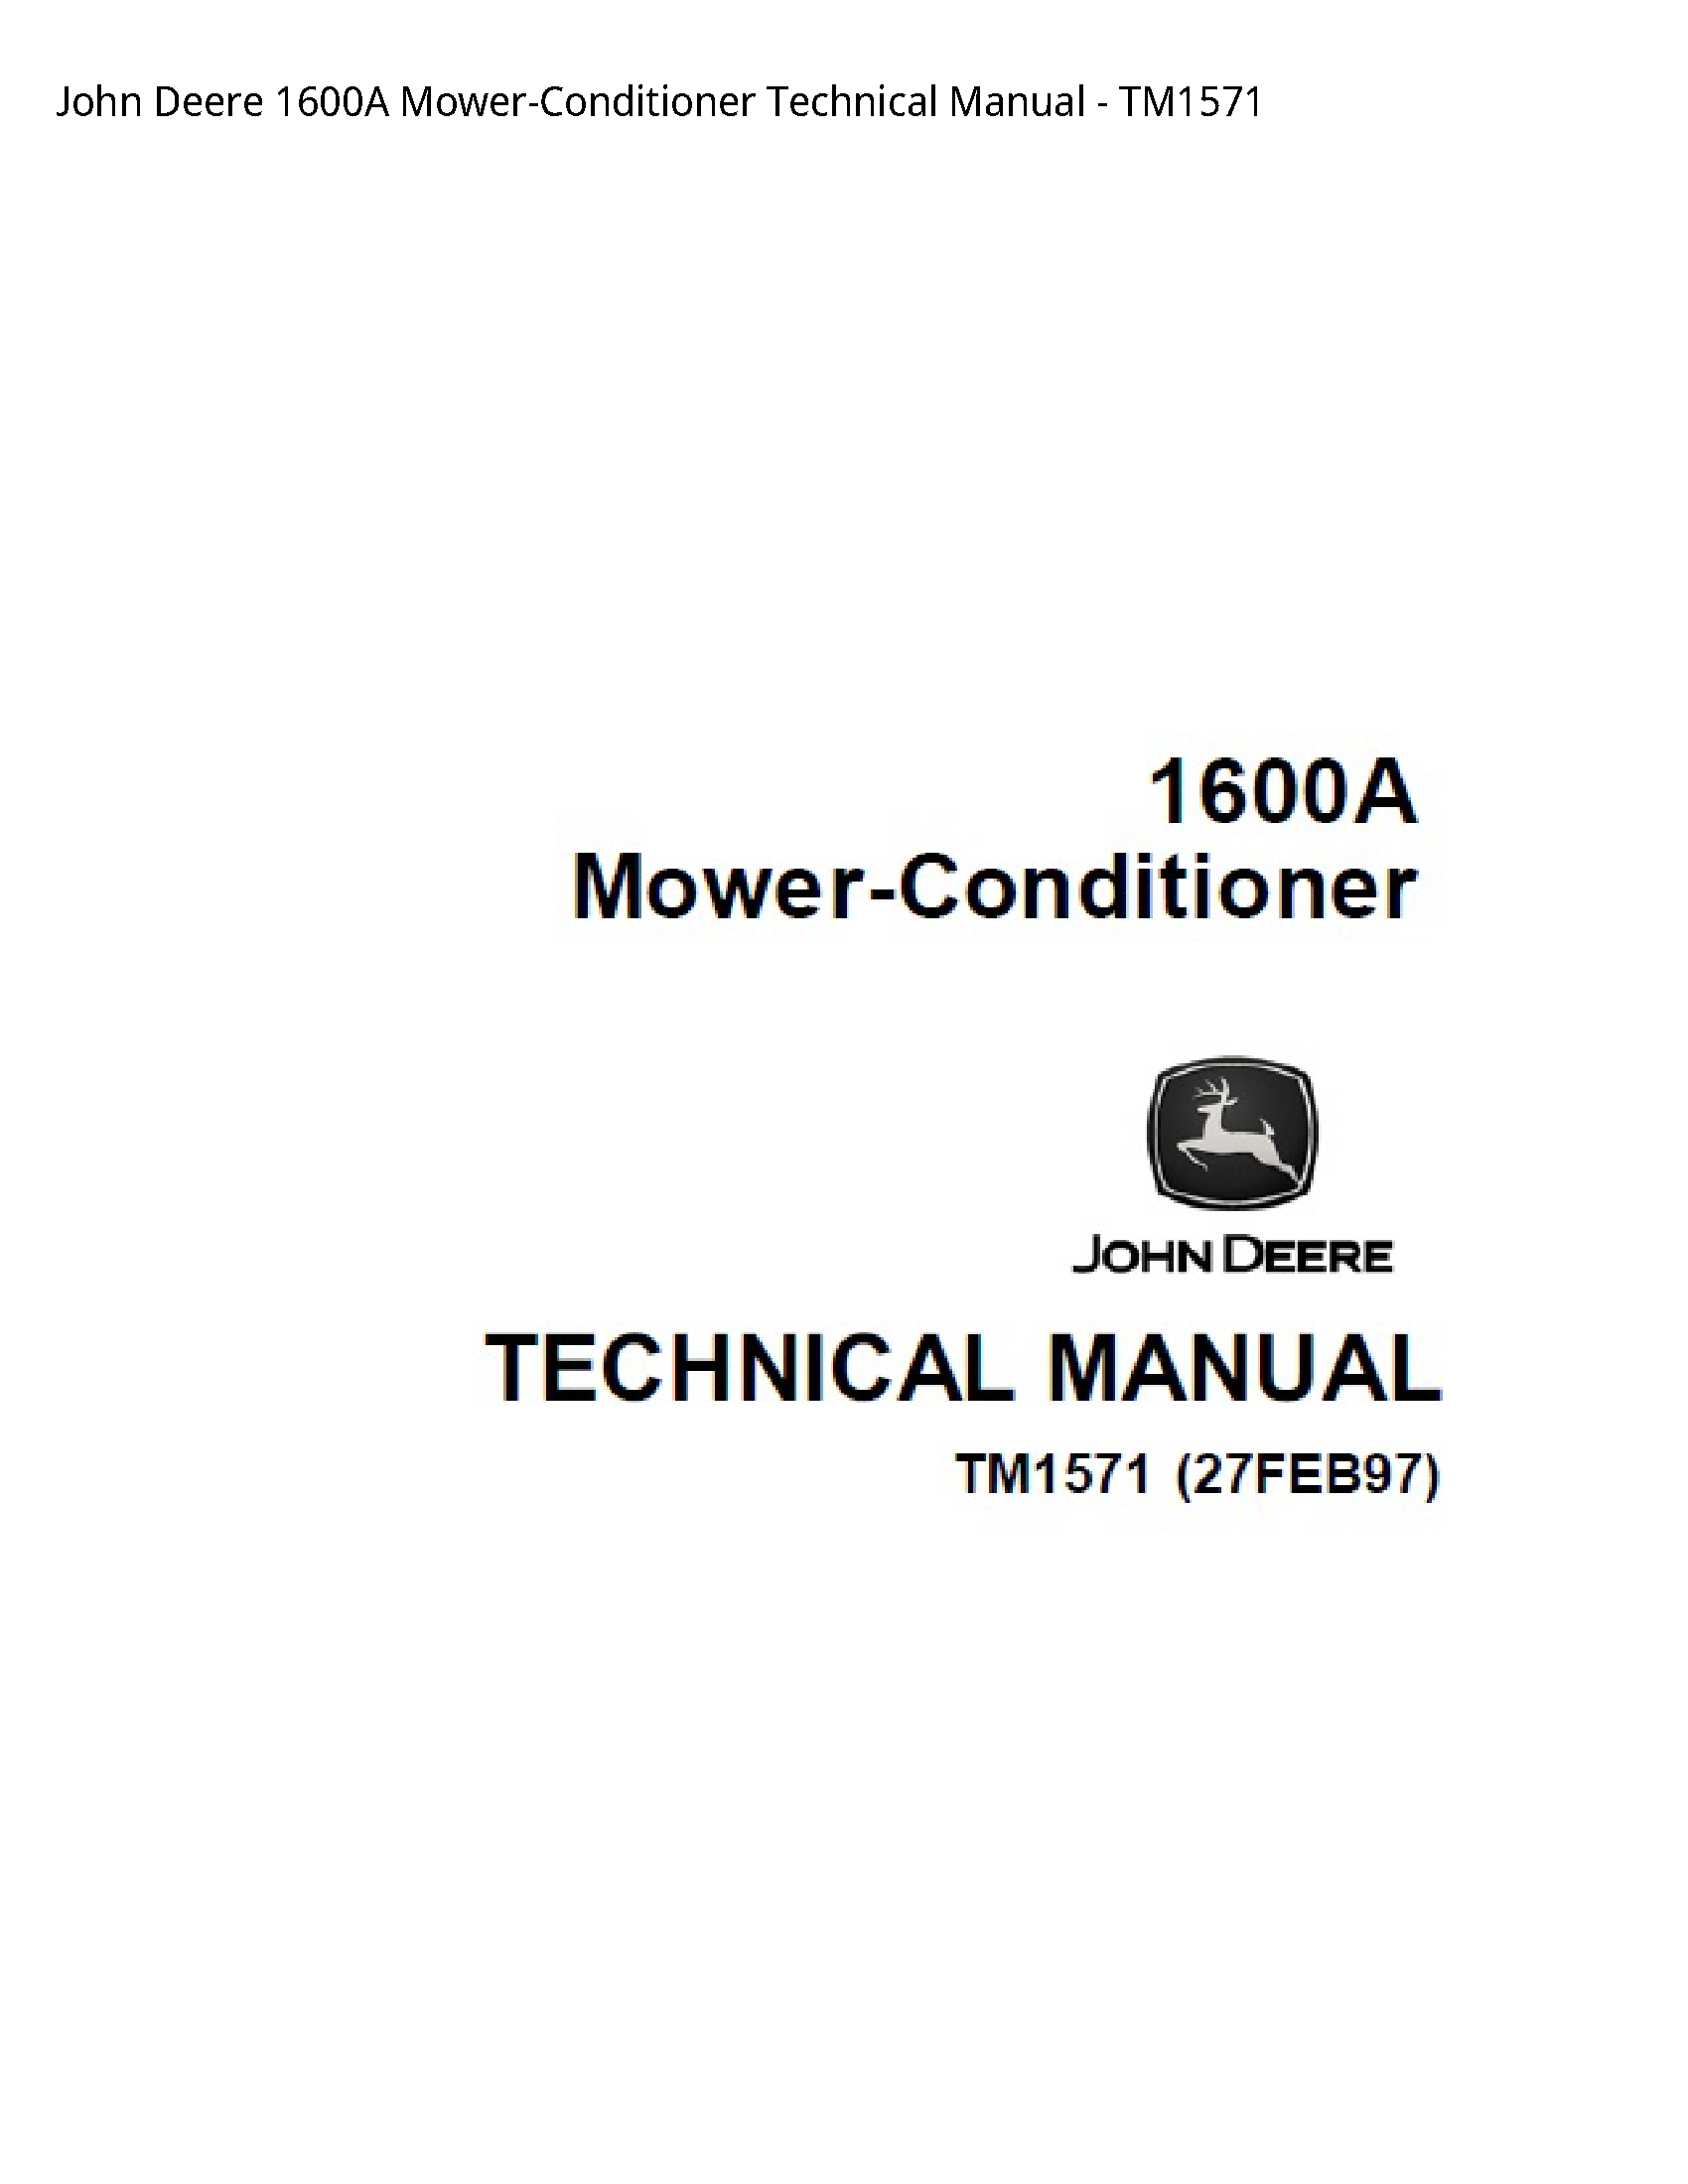 John Deere 1600A Mower-Conditioner Technical manual